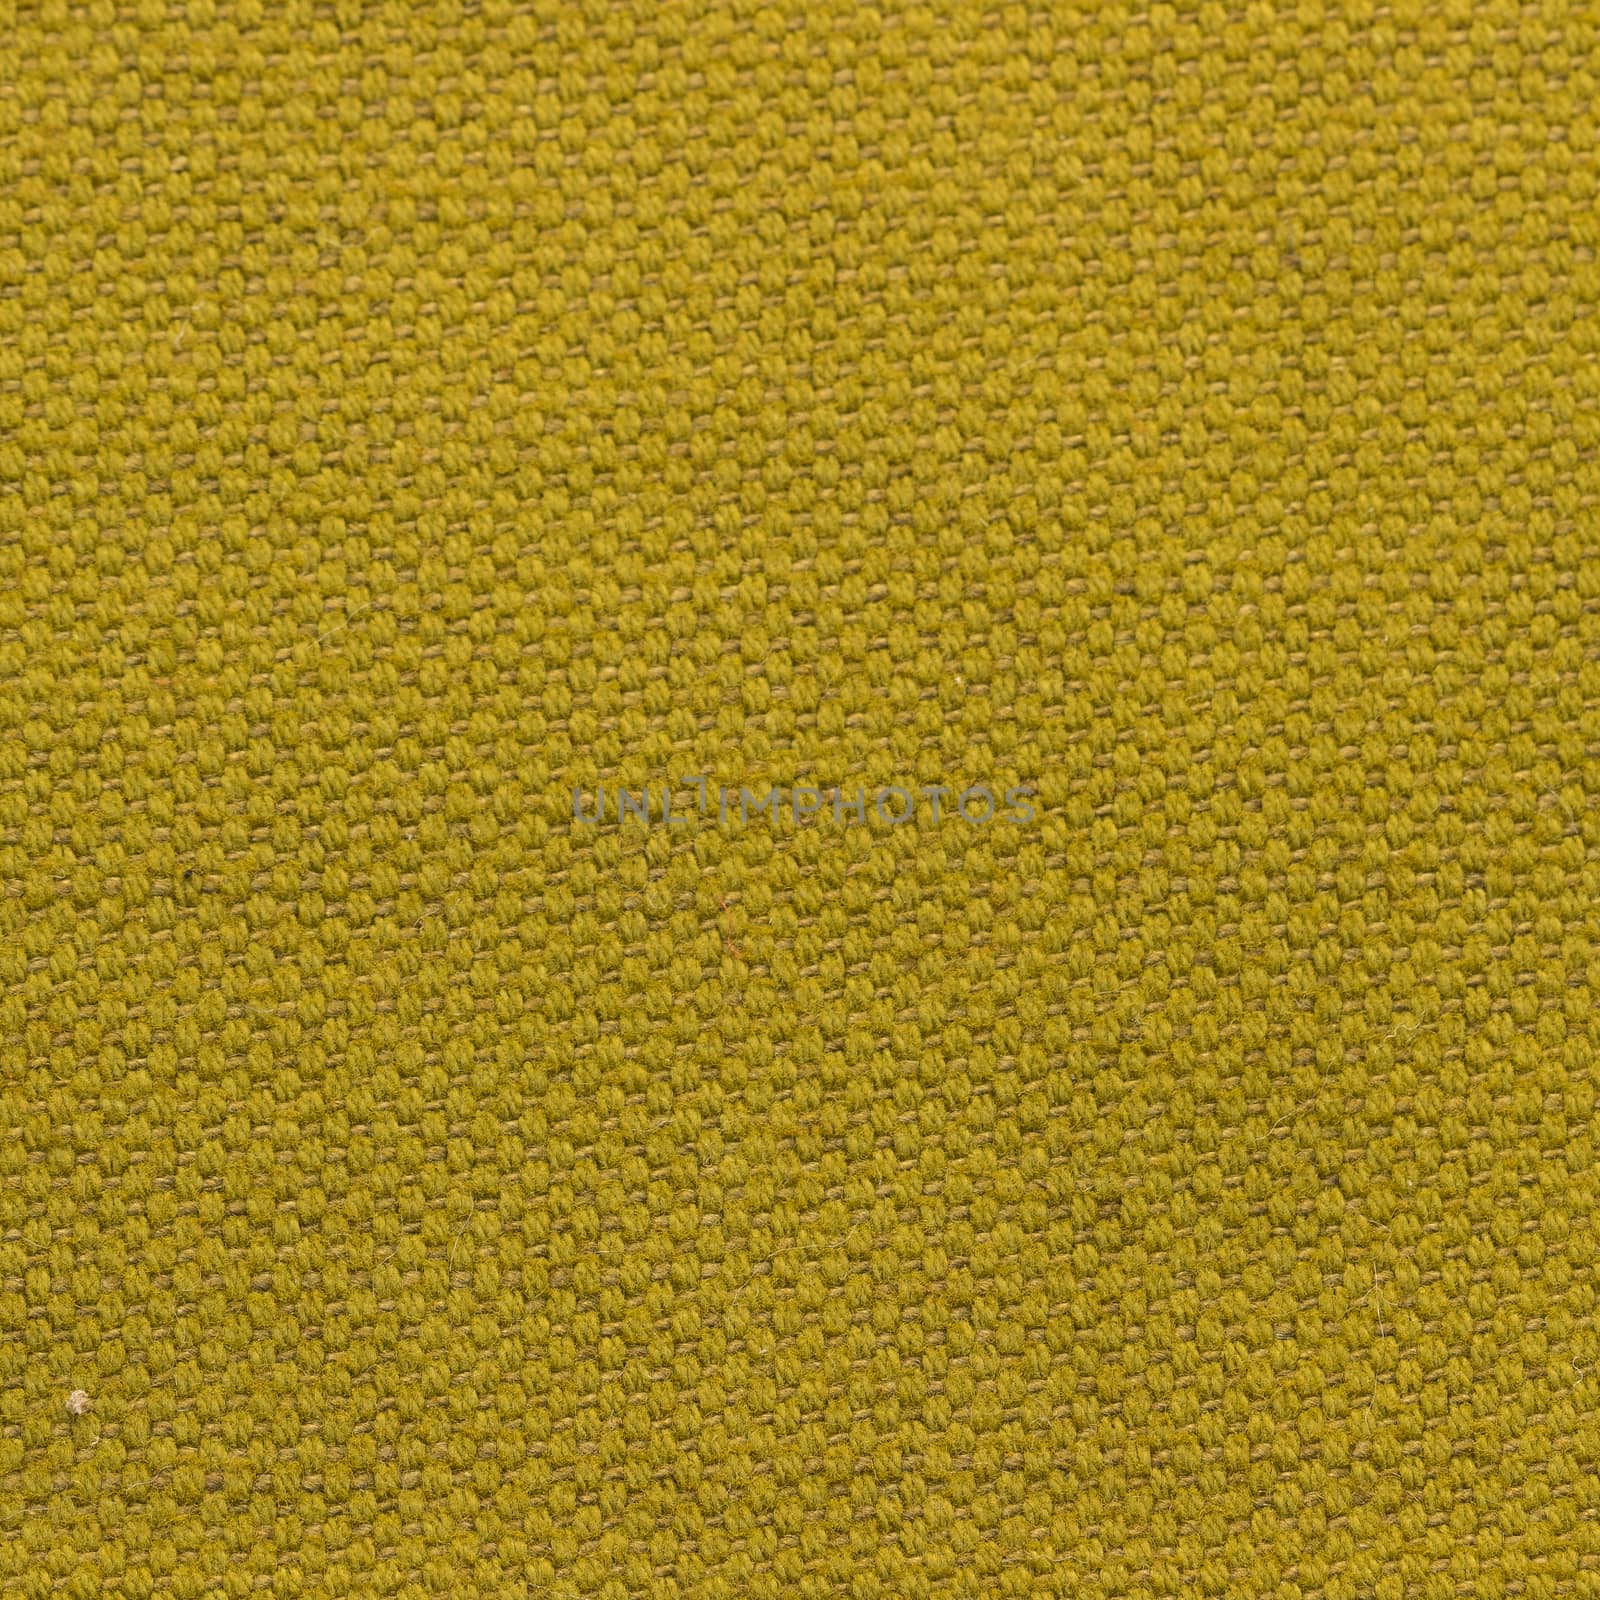 Canvas fabric texture by alanstix64